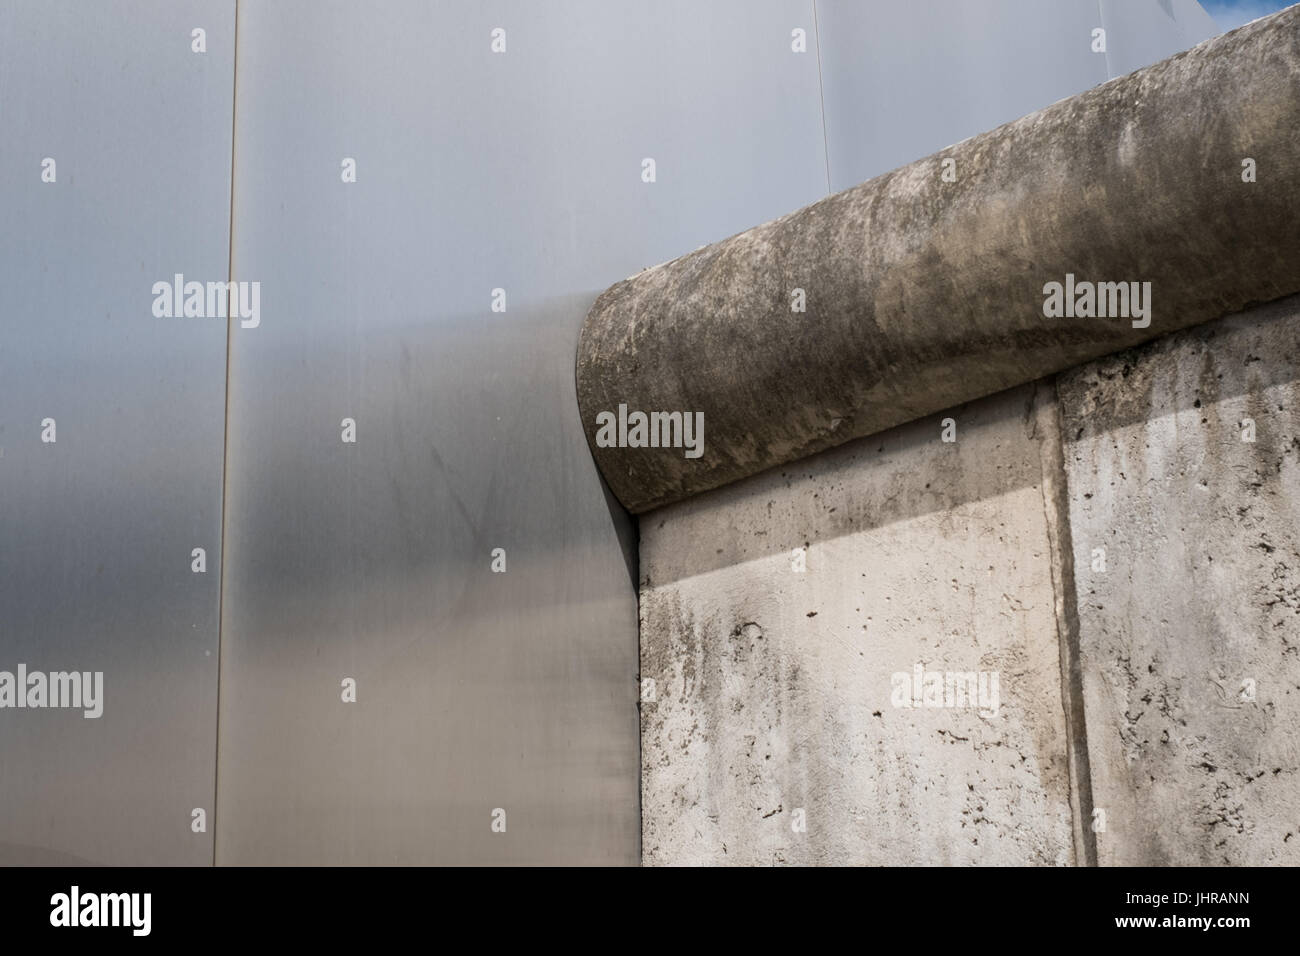 Berlin, Germany - July 13, 2017: Remains of the Berlin Wall / Berlin Wall memorial at Bernauer Strasse in Berlin, Germany. Stock Photo